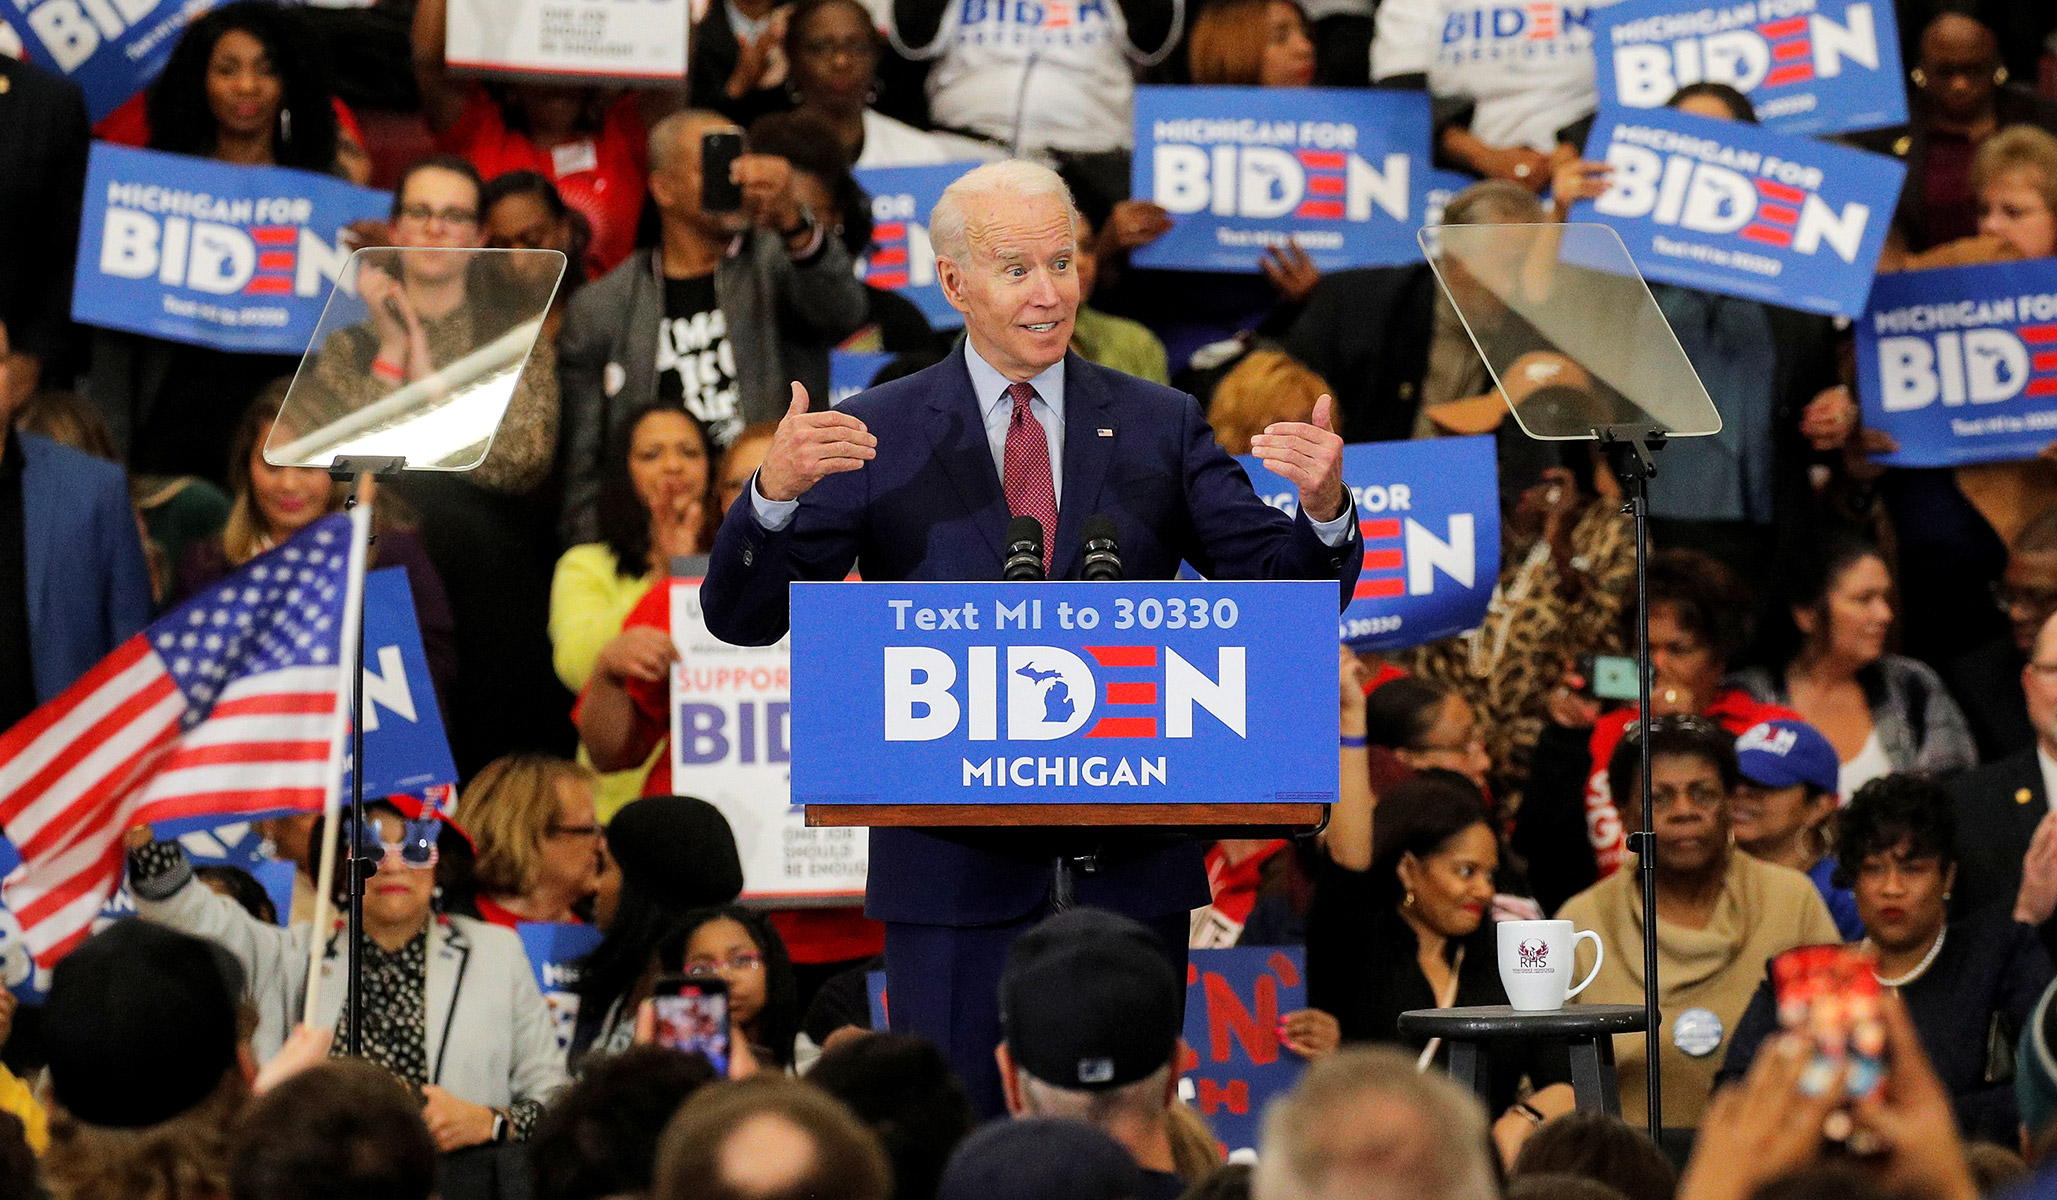 Democratic Primary Joe Biden Wins Michigan, Builds on Super Tuesday